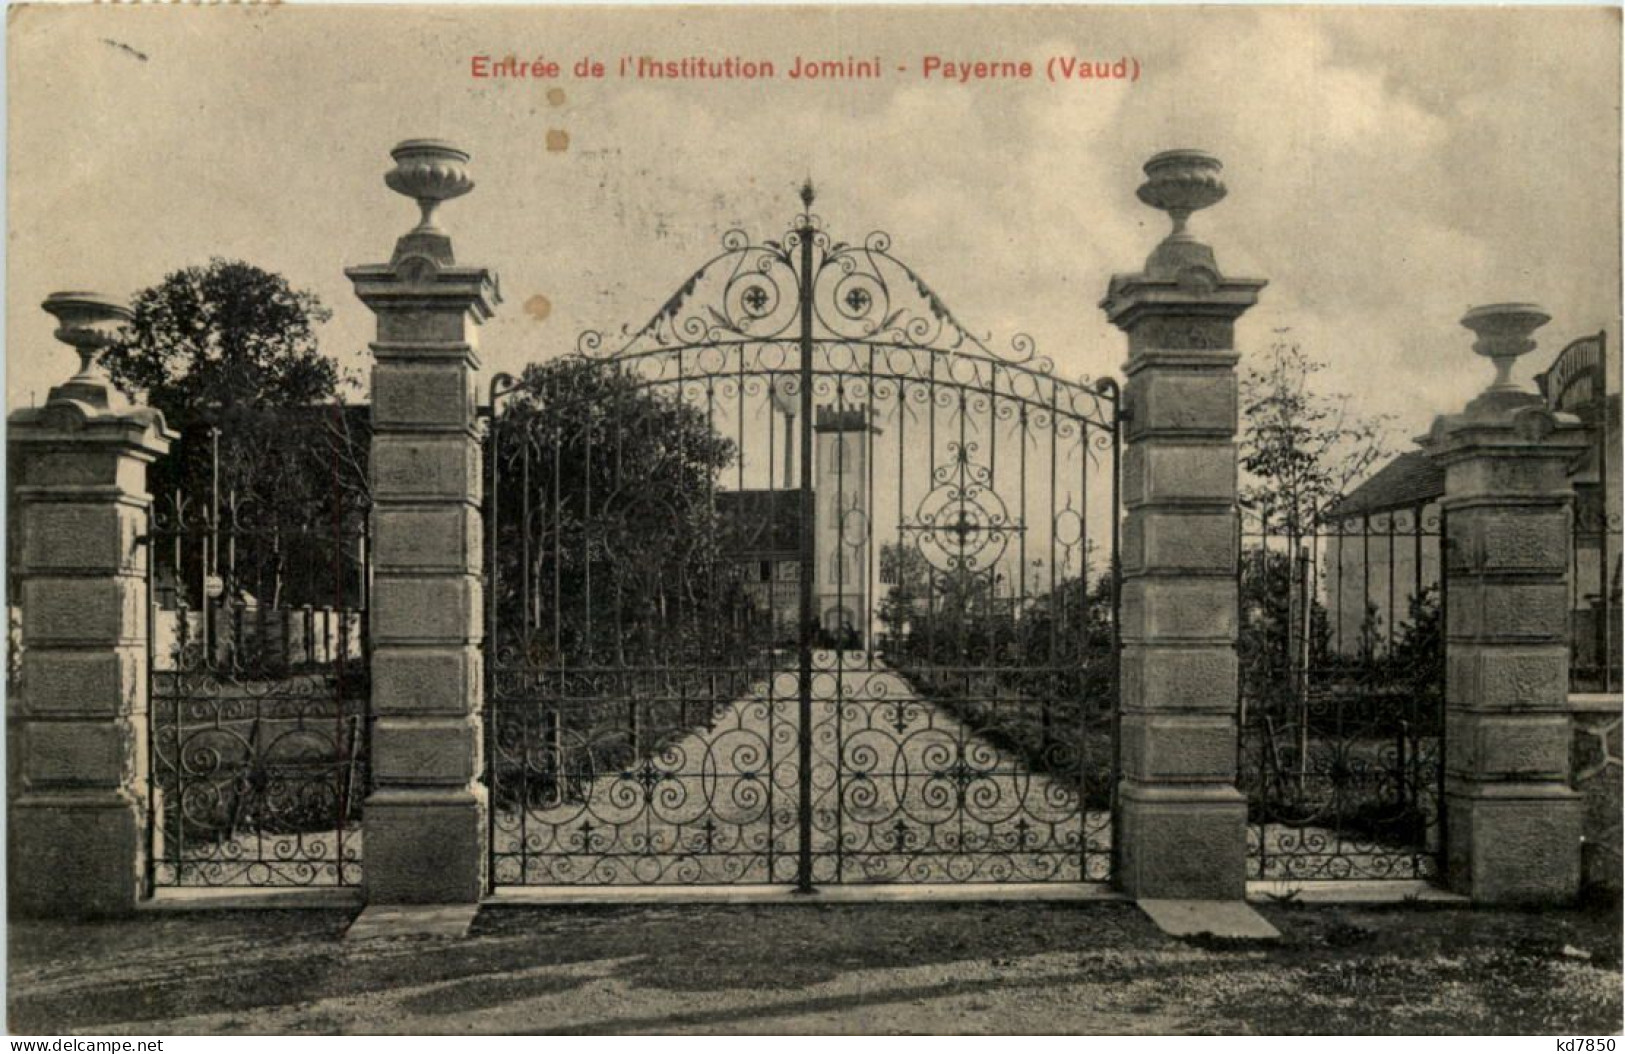 Payerne, Entree De L'Institution Jomini - Payerne